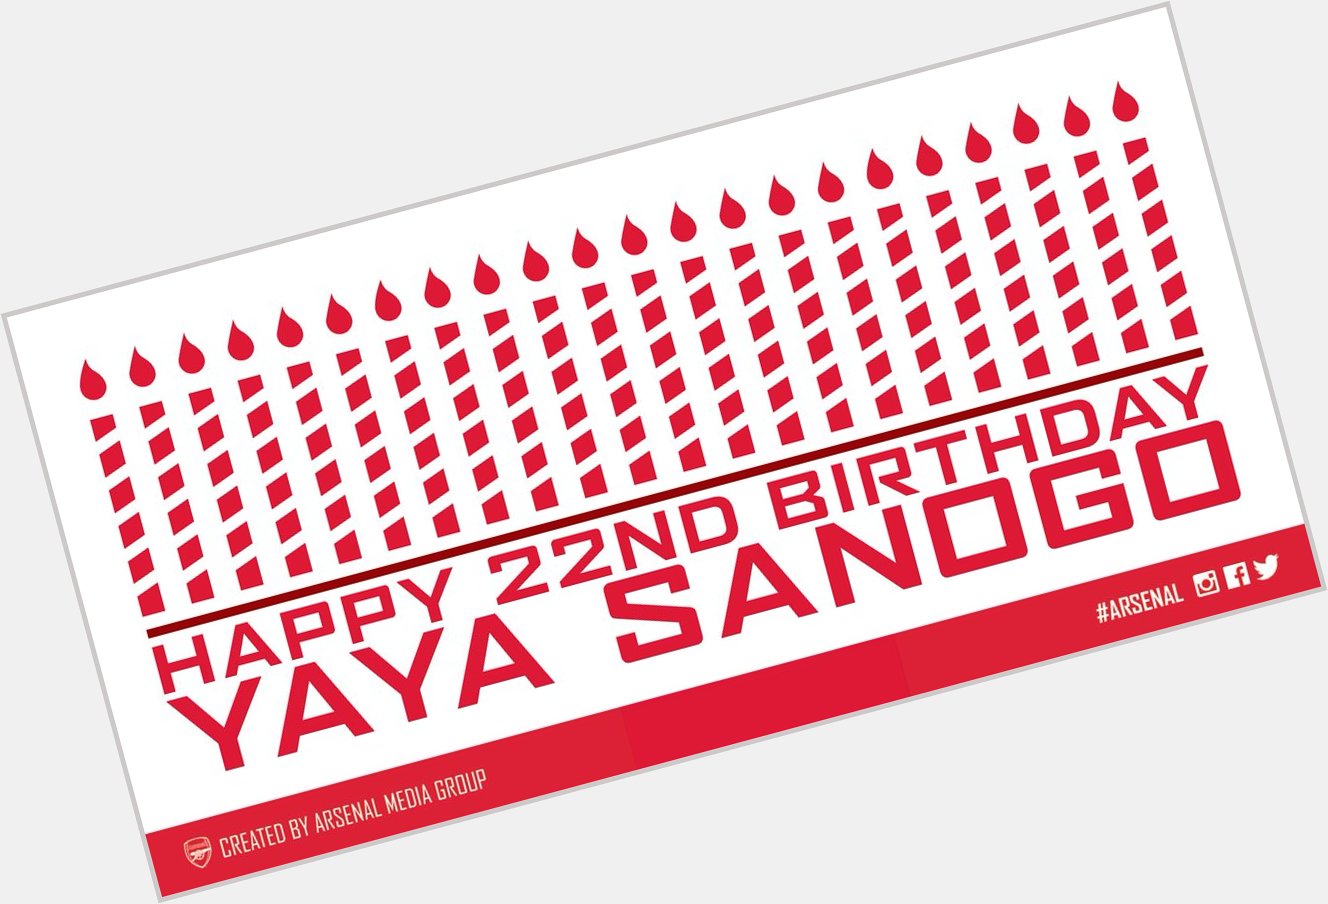 Ooo Yaya Sanogo! Morning all - we start by wishing a very happy 22nd birthday to 